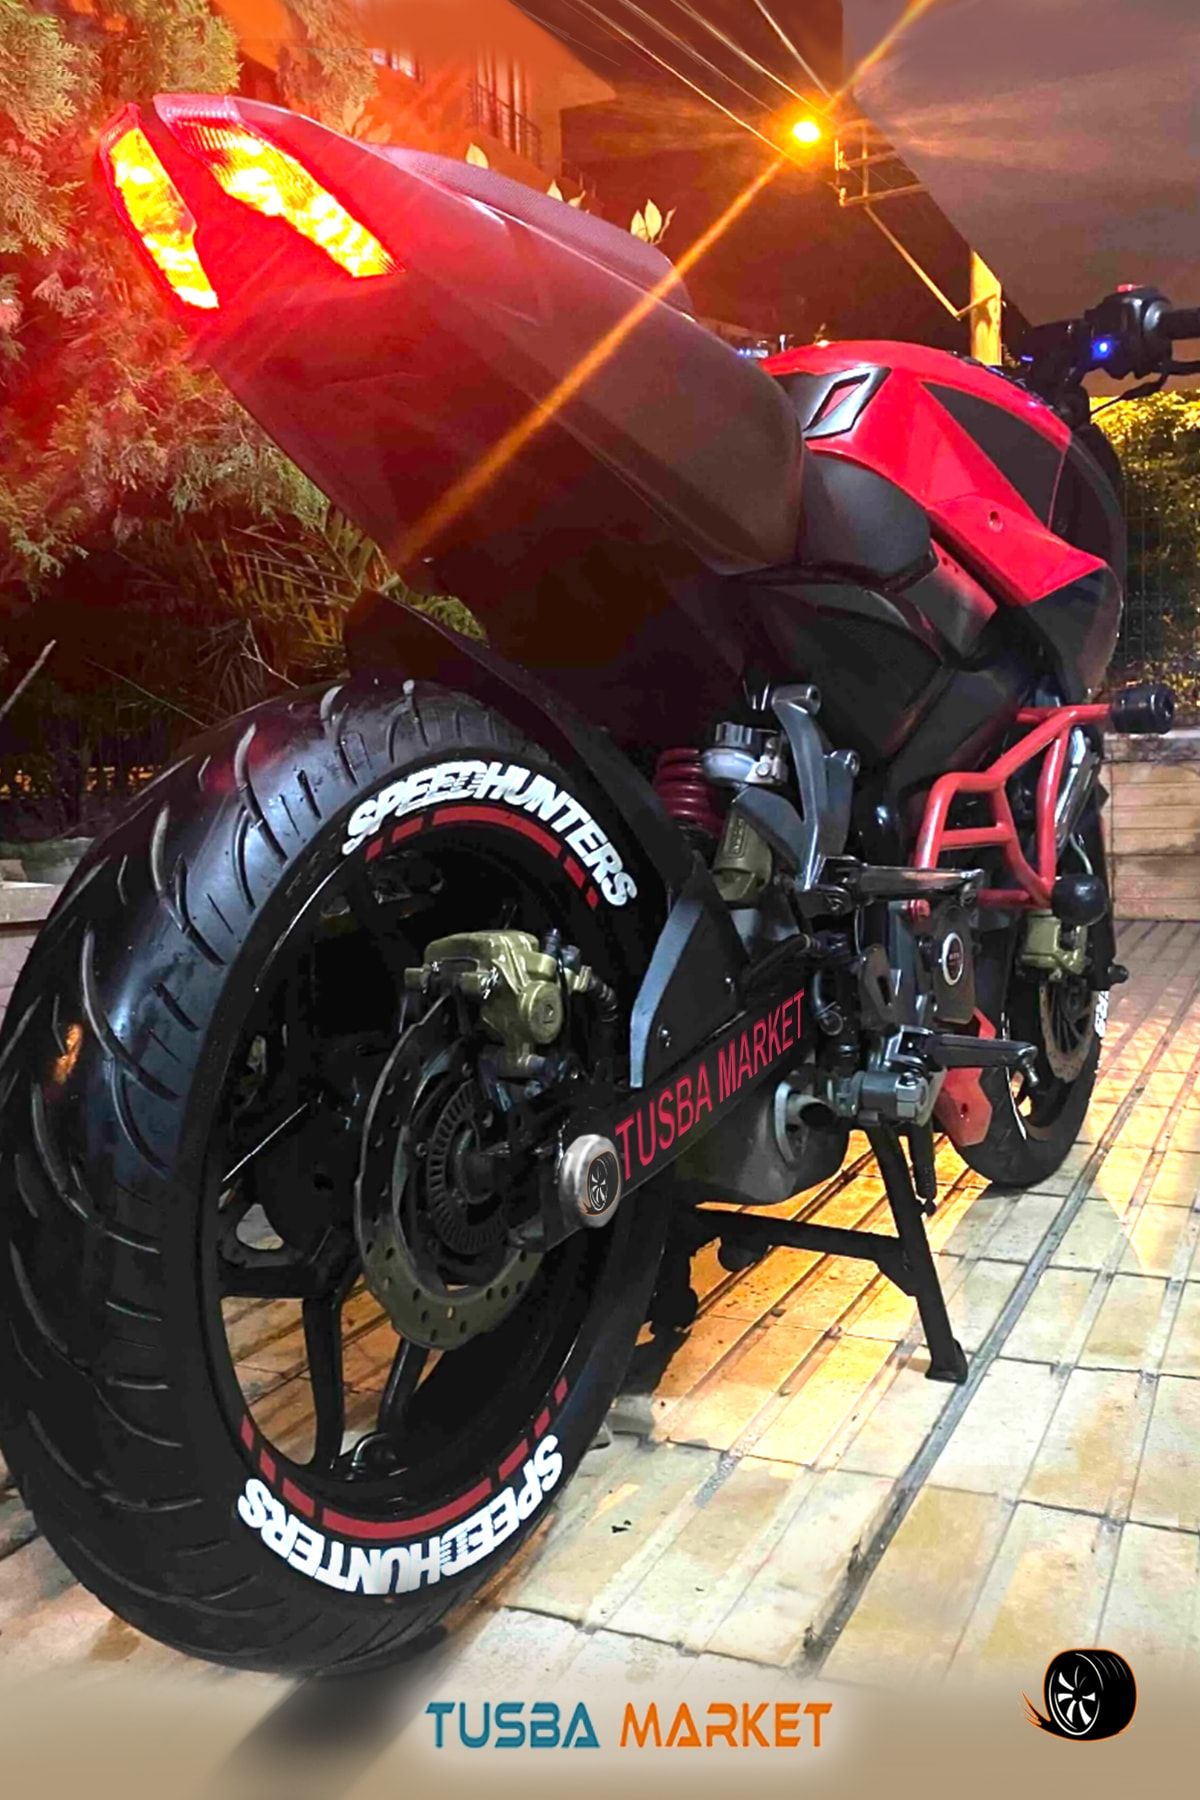 TUSBA MARKET Speedhunters Motosiklet Otomobil 3d Jant & Lastik Yazısı Sticker Arma Şerit | Araç Oto Sticker Arma